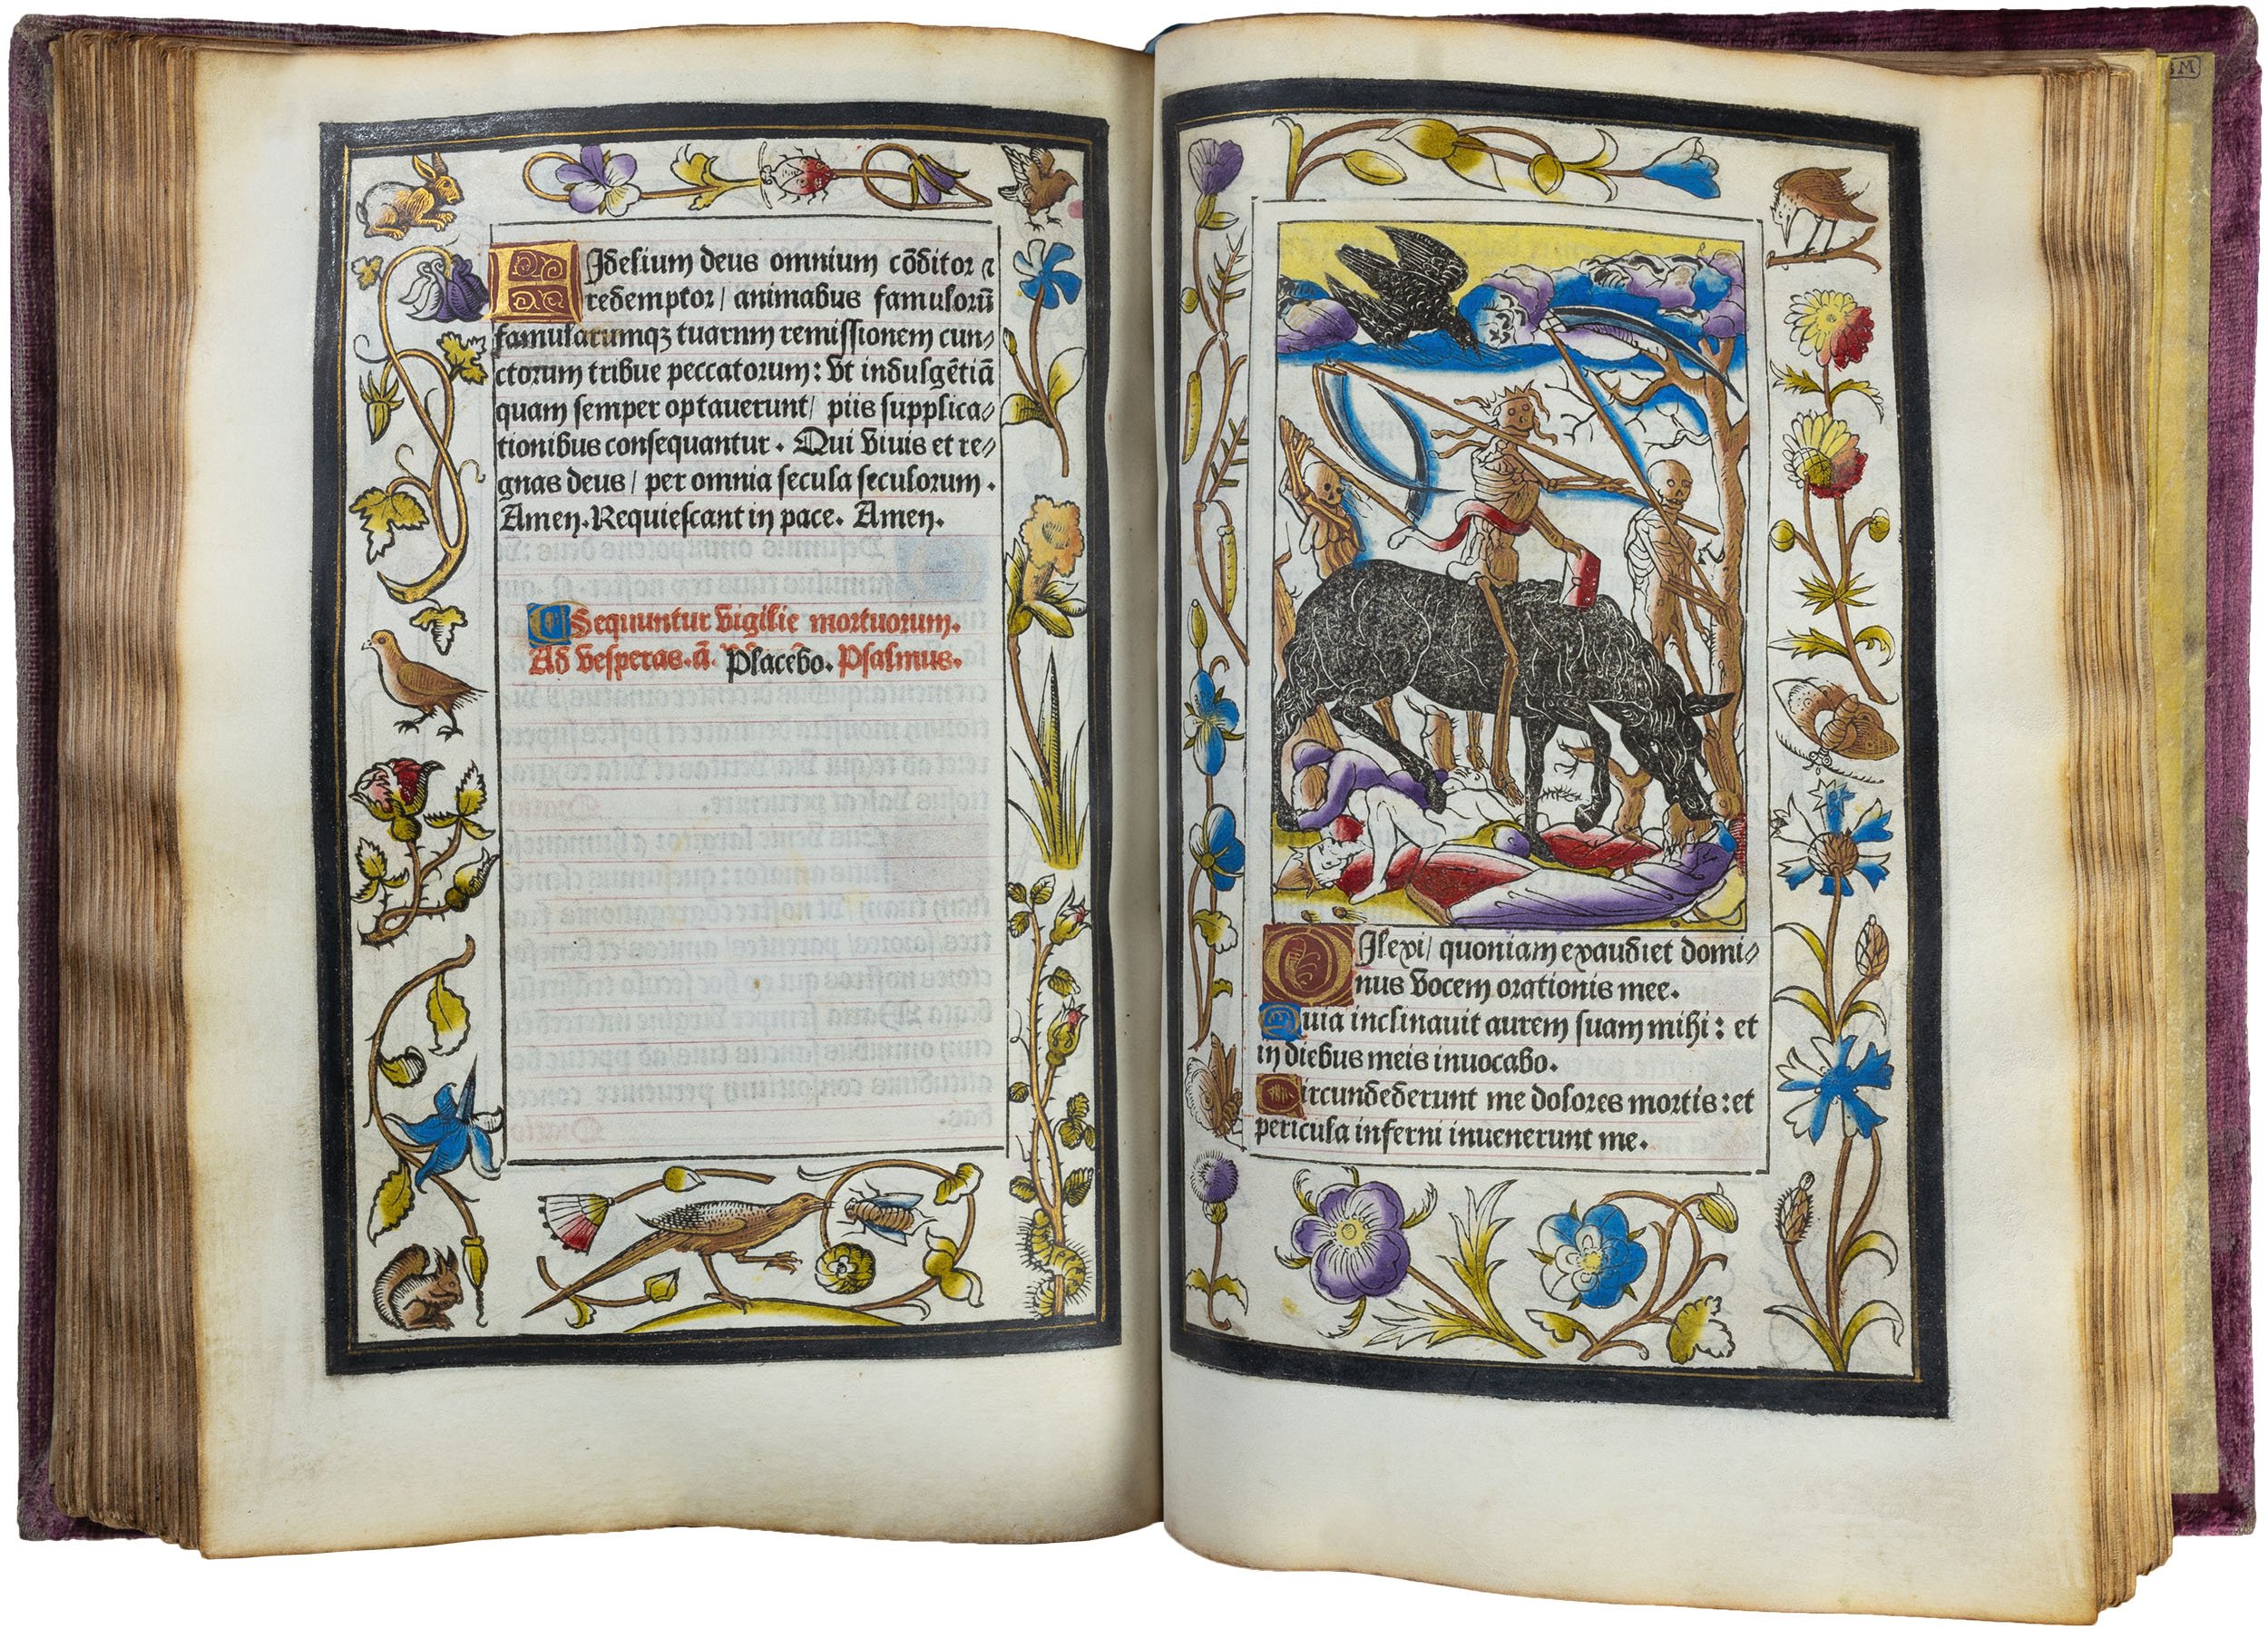 geoffroy-tory-printed-book-of-hours-illuminated-vellum-22-october-1527-prince-dessing-villeneuve-horae-bmv-104.jpg